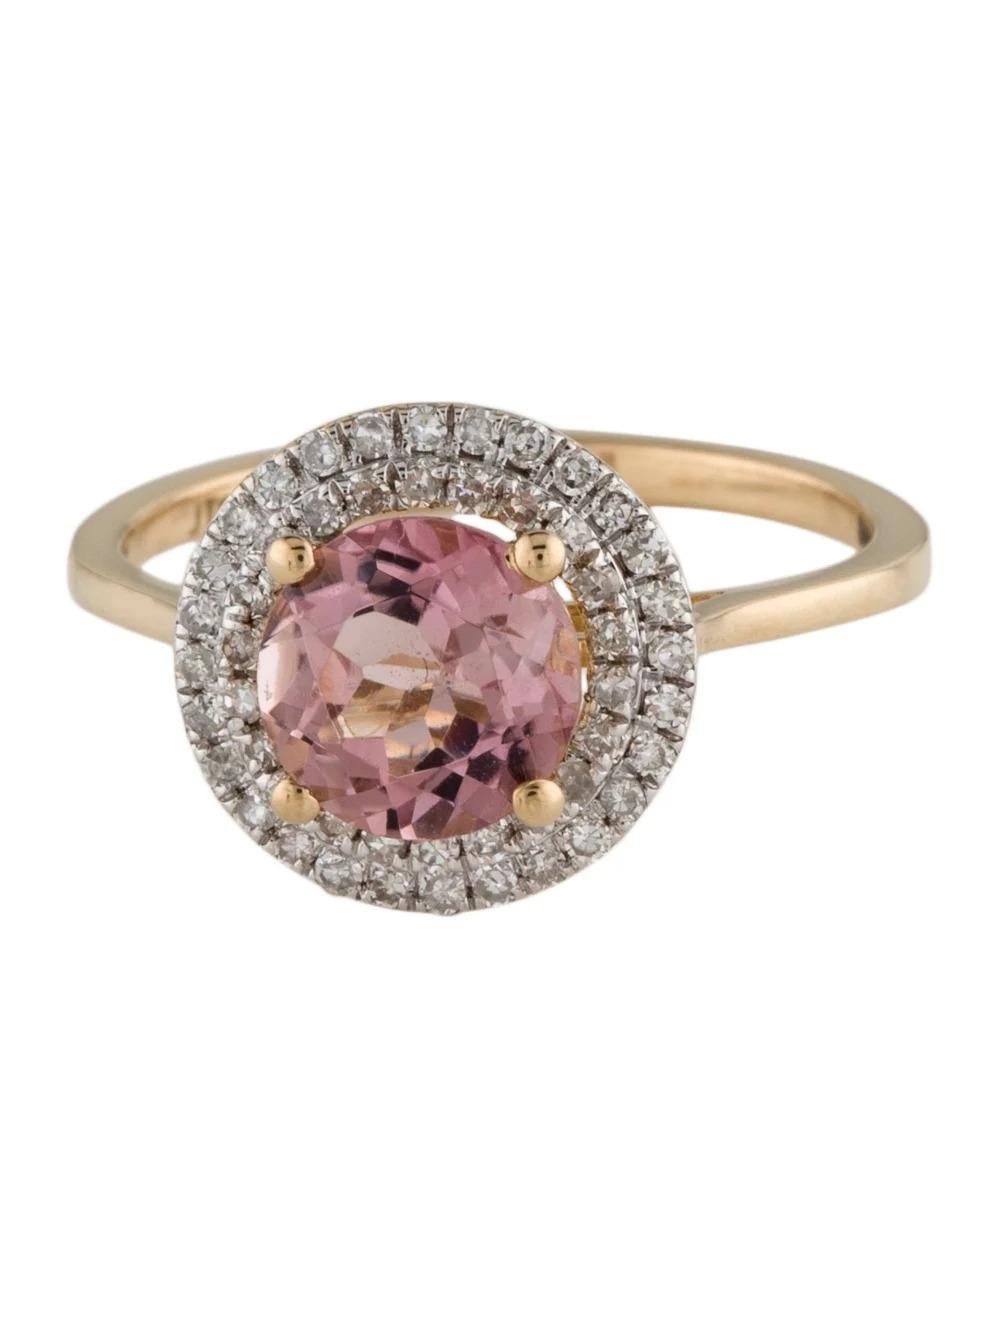 Round Cut 14K Tourmaline & Diamond Cocktail Ring, Size 6.5 - Elegant Statement Jewelry For Sale